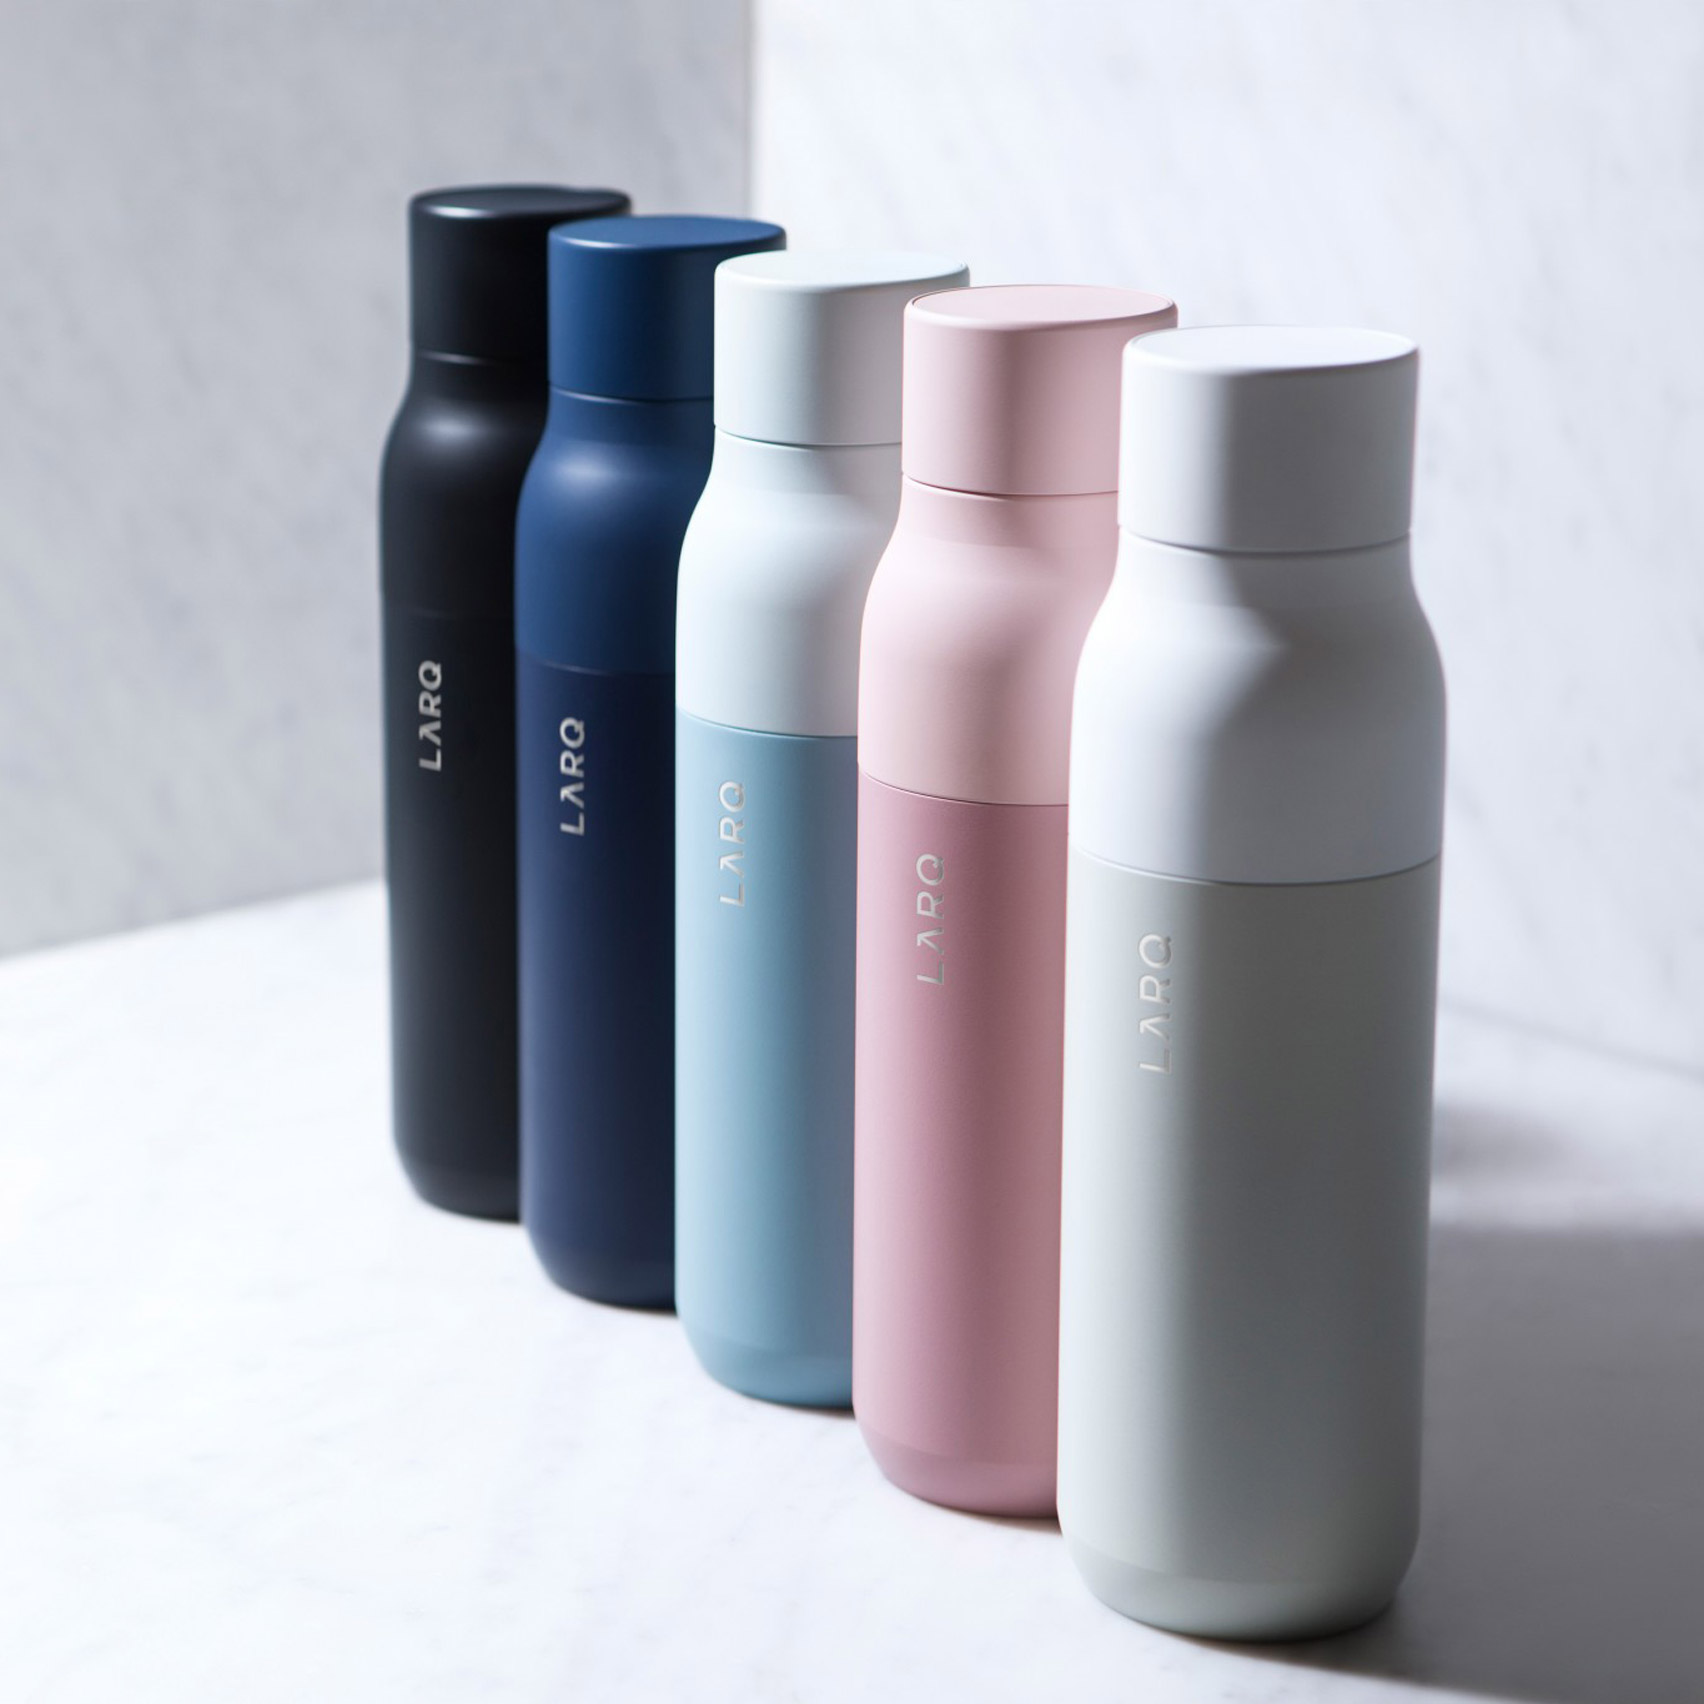 larq-water-bottle-uv-light-self-cleaning-product-design_sq-a.jpg